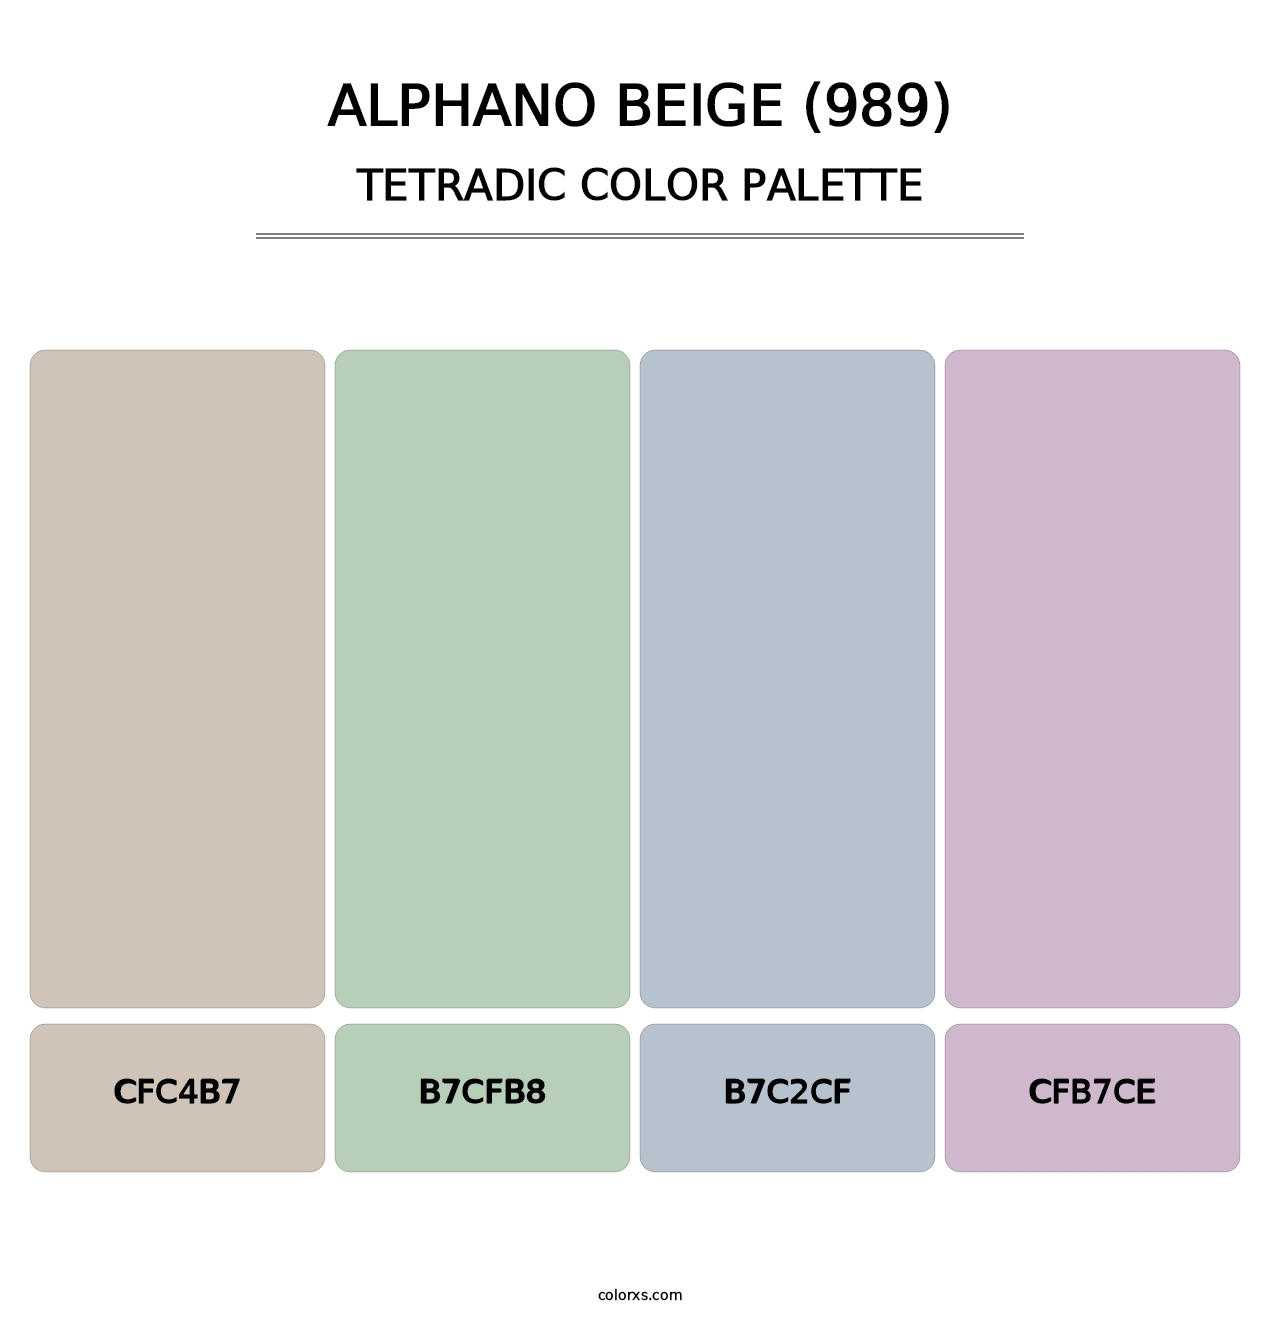 Alphano Beige (989) - Tetradic Color Palette